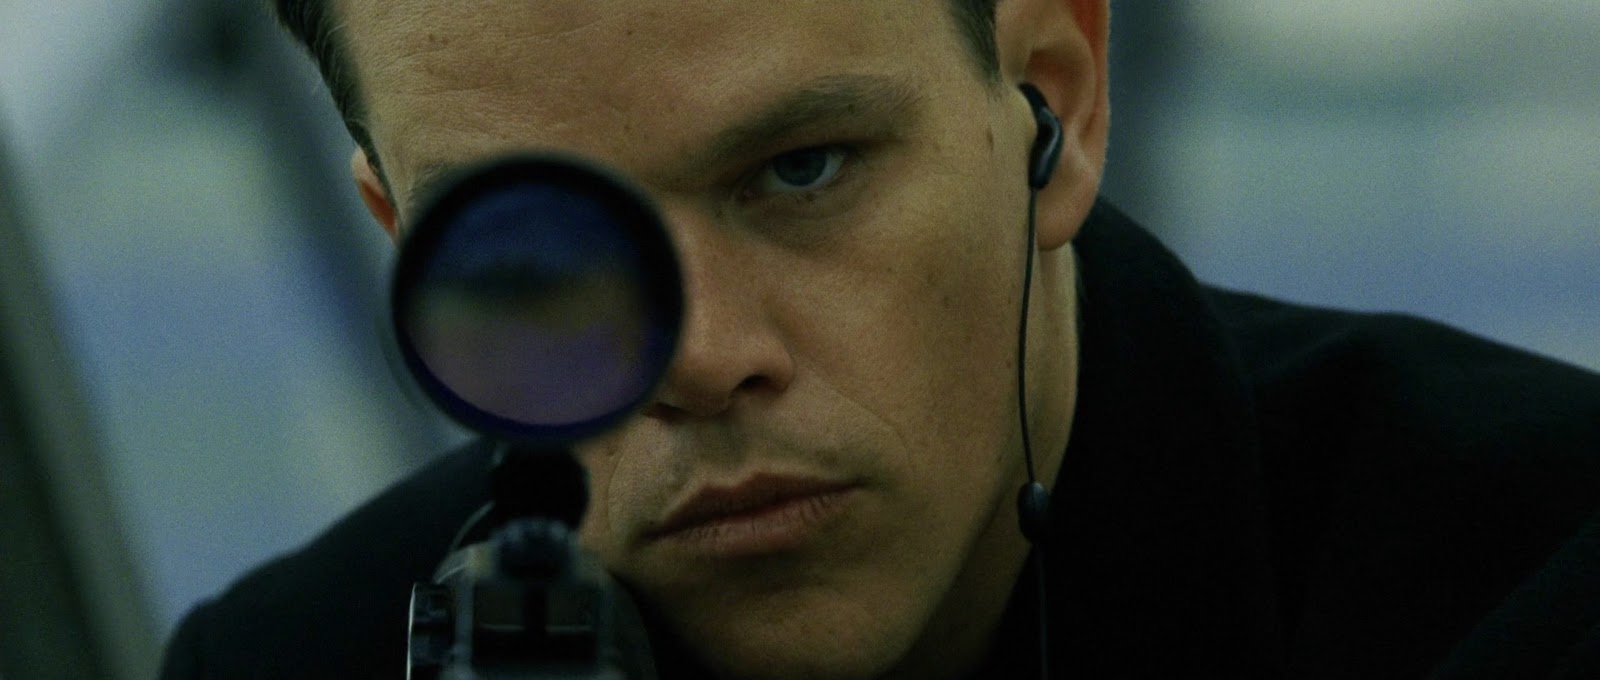 Jason Bourne Backgrounds on Wallpapers Vista